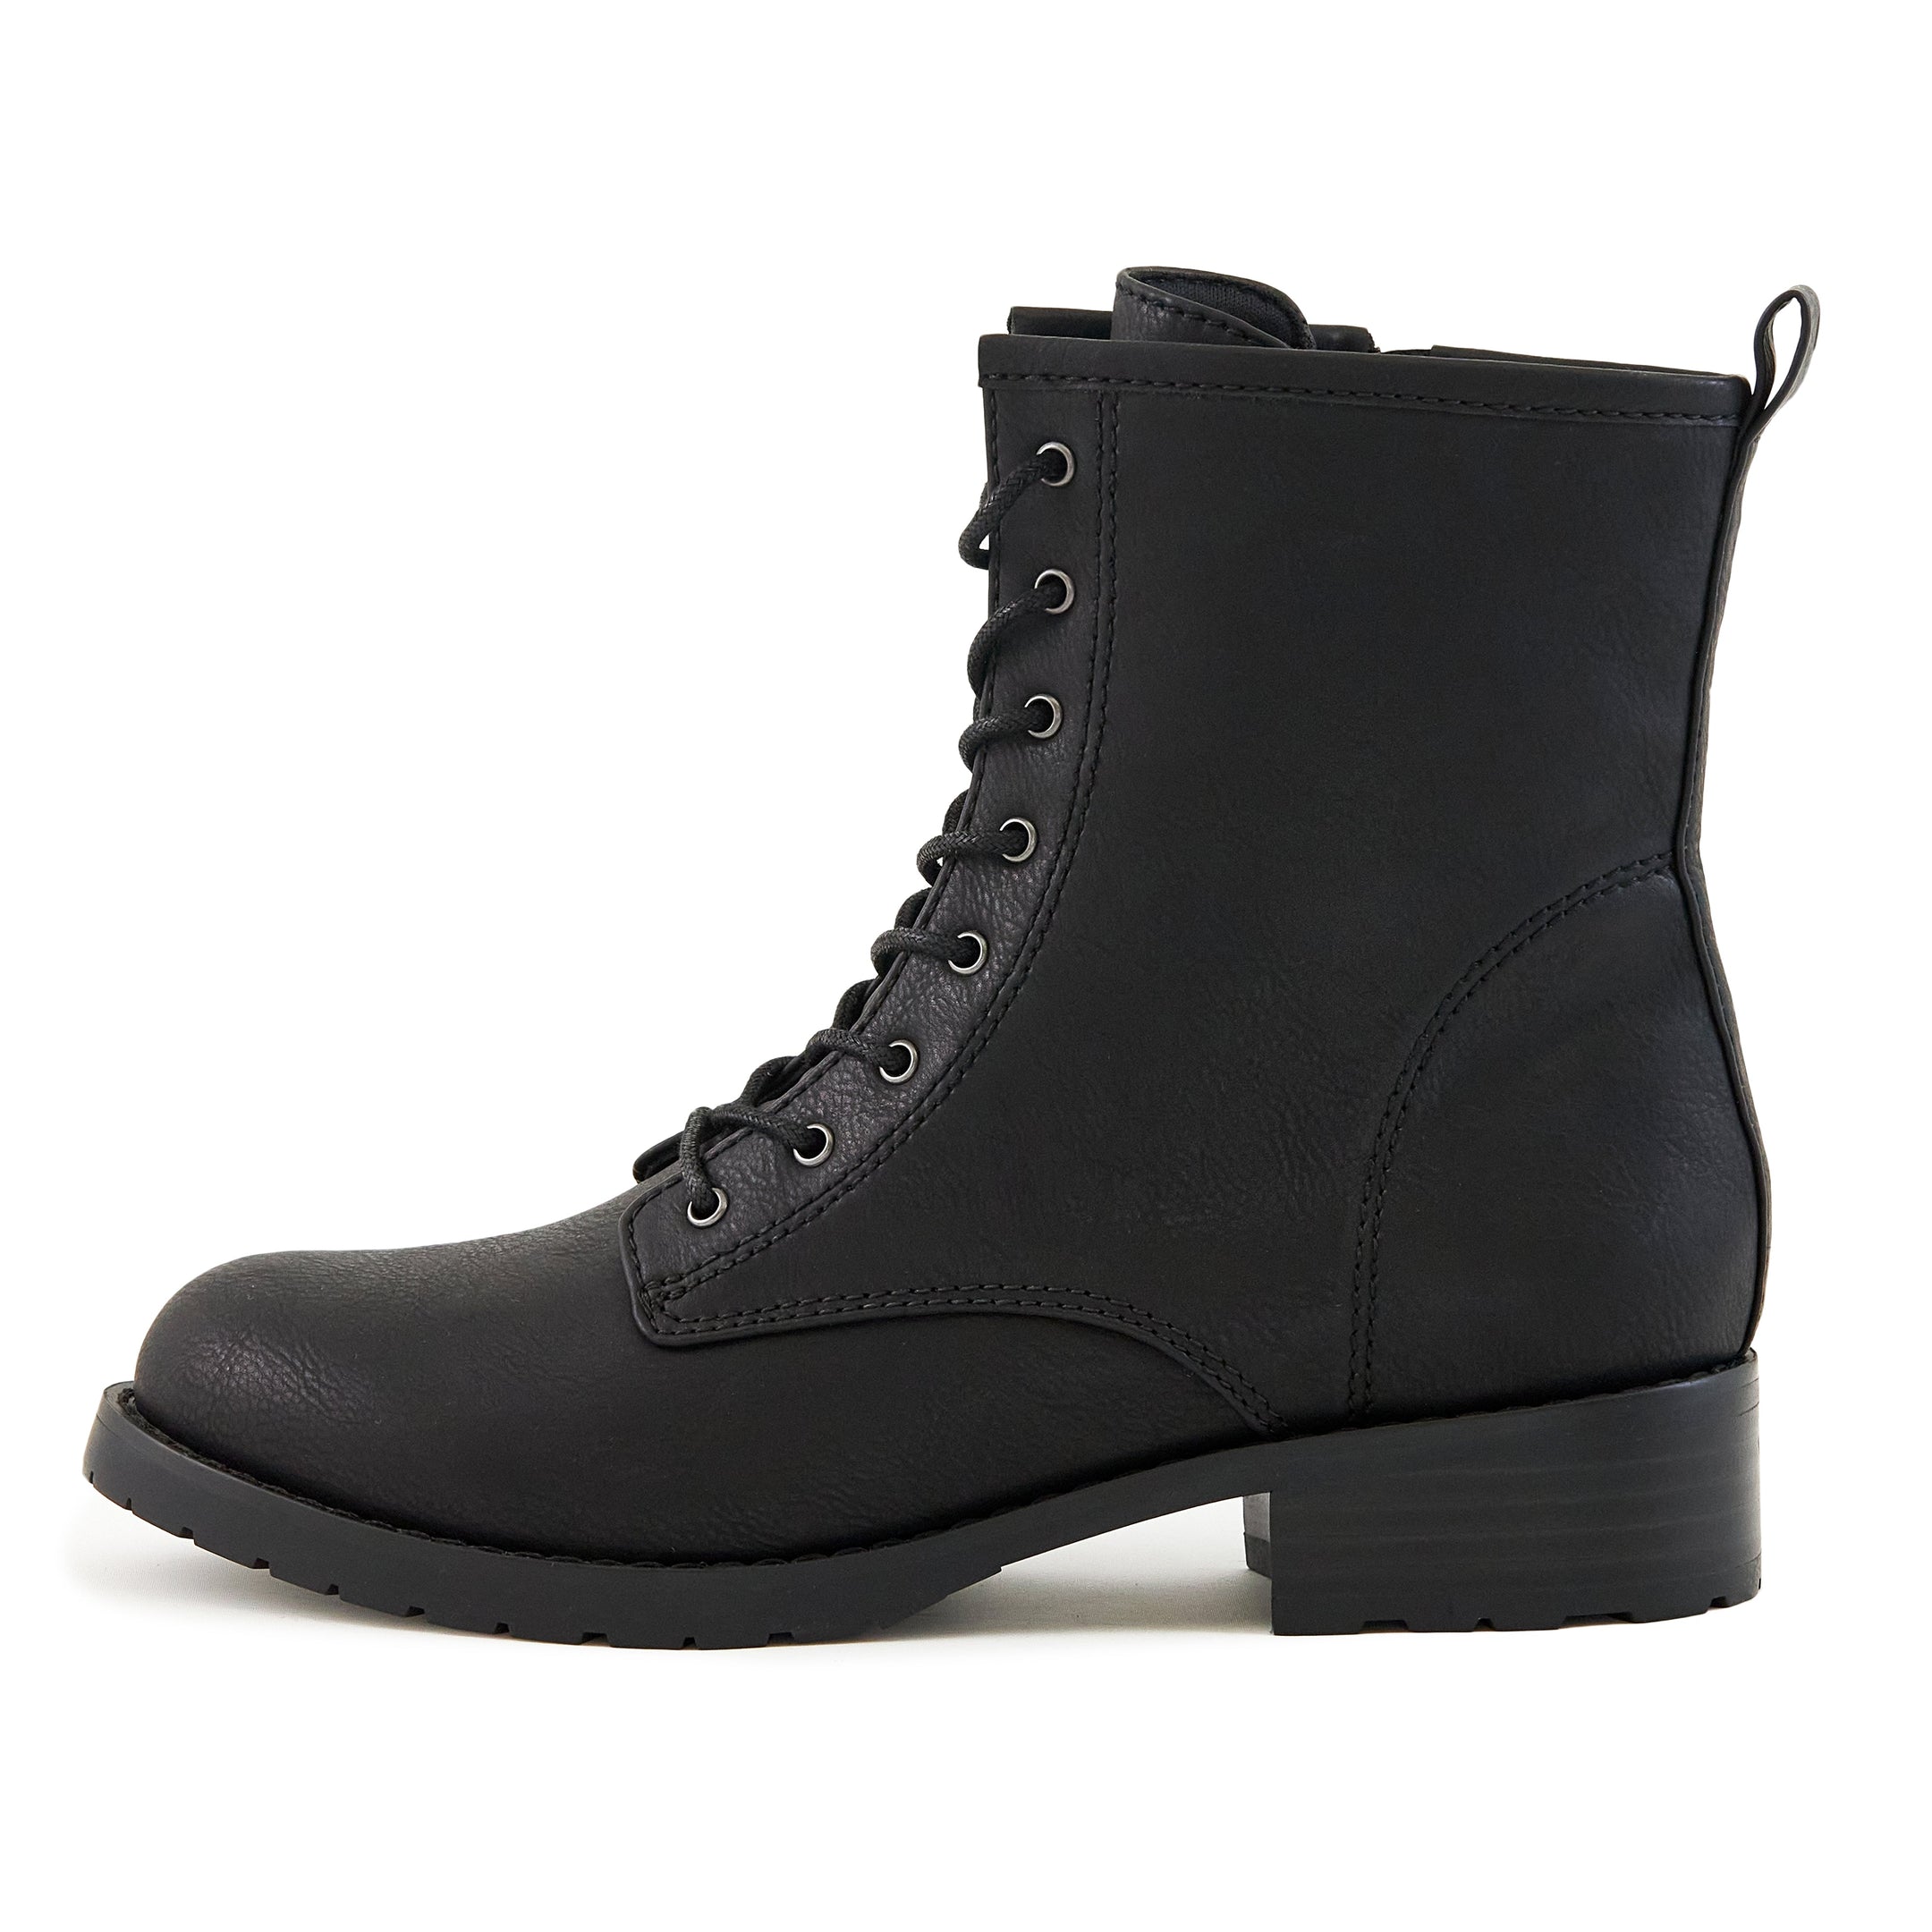 Women's Combat Boots Black